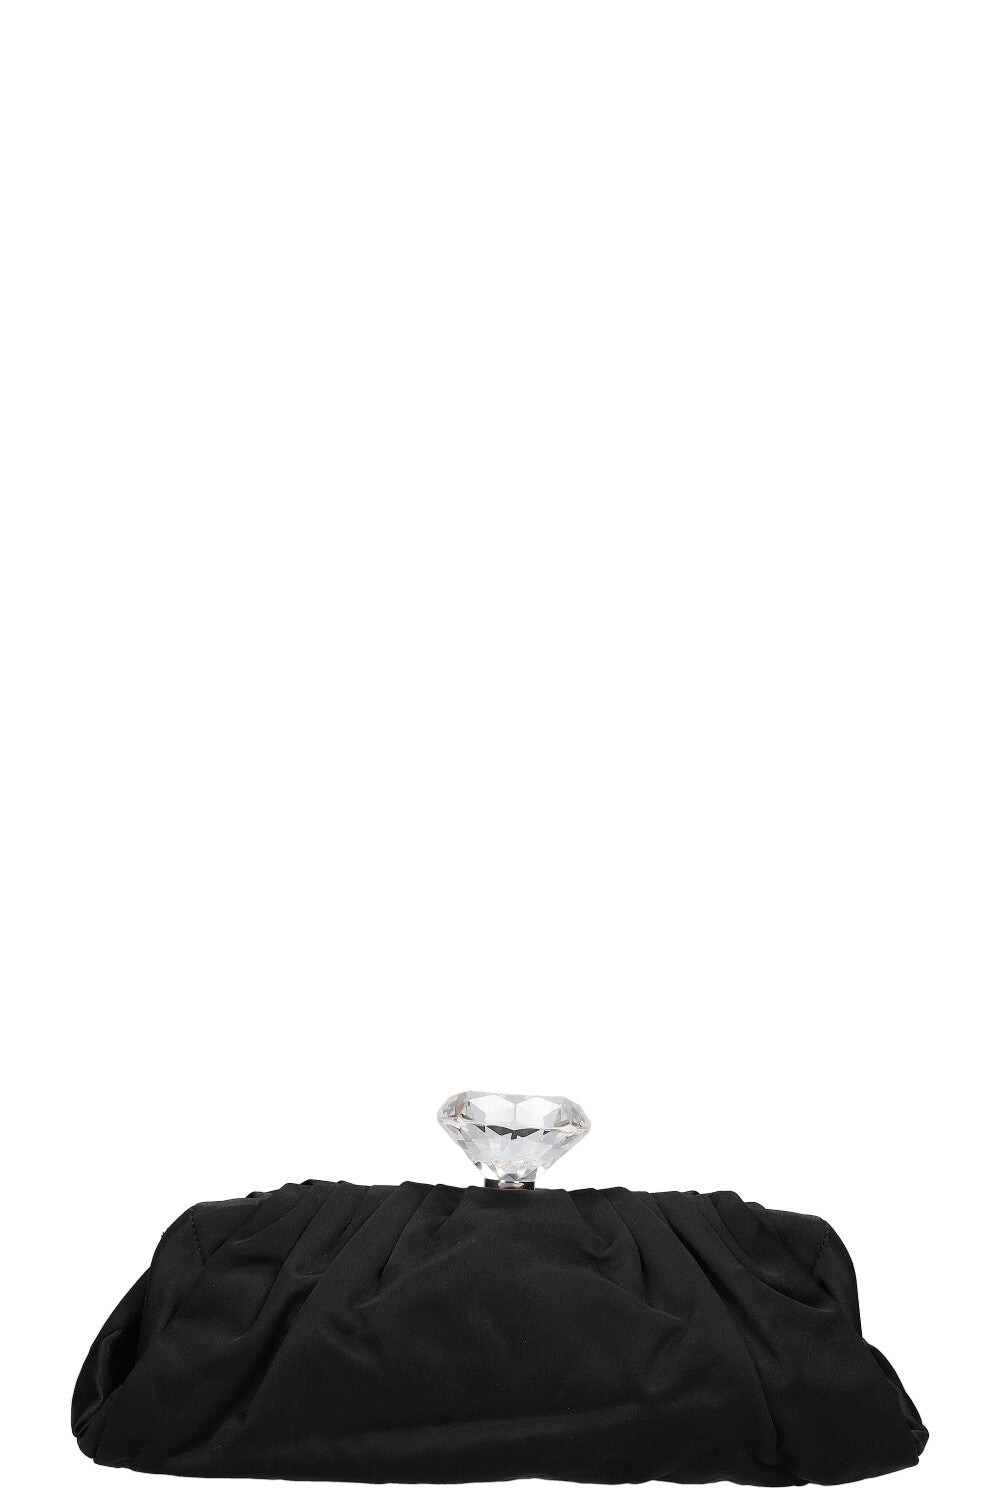 Chanel Satin Diamond Clutch Black 